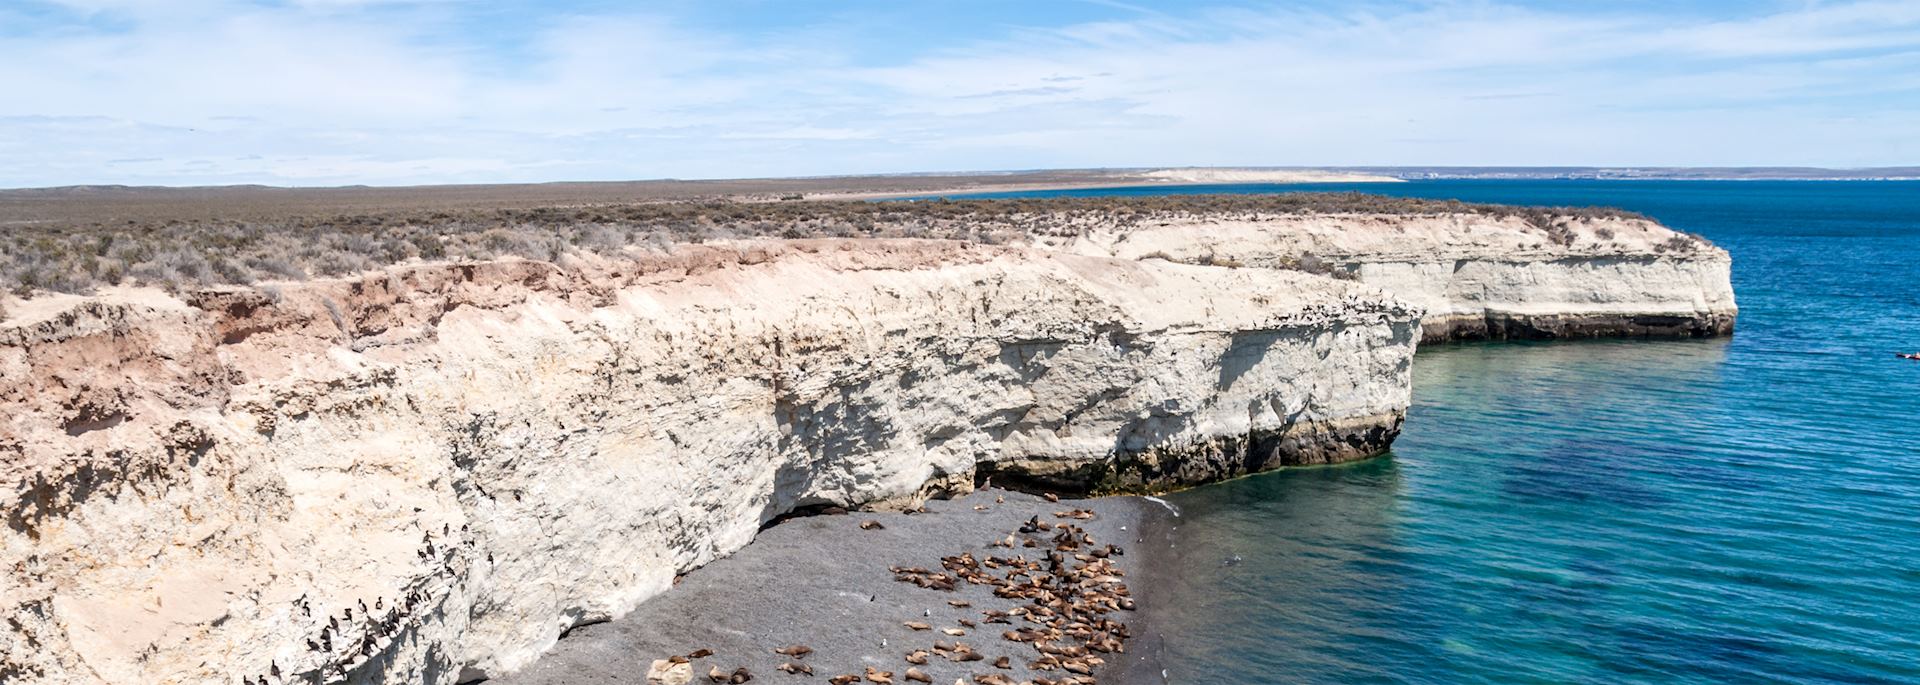 Sea lions on a beach near Puerto Madryn